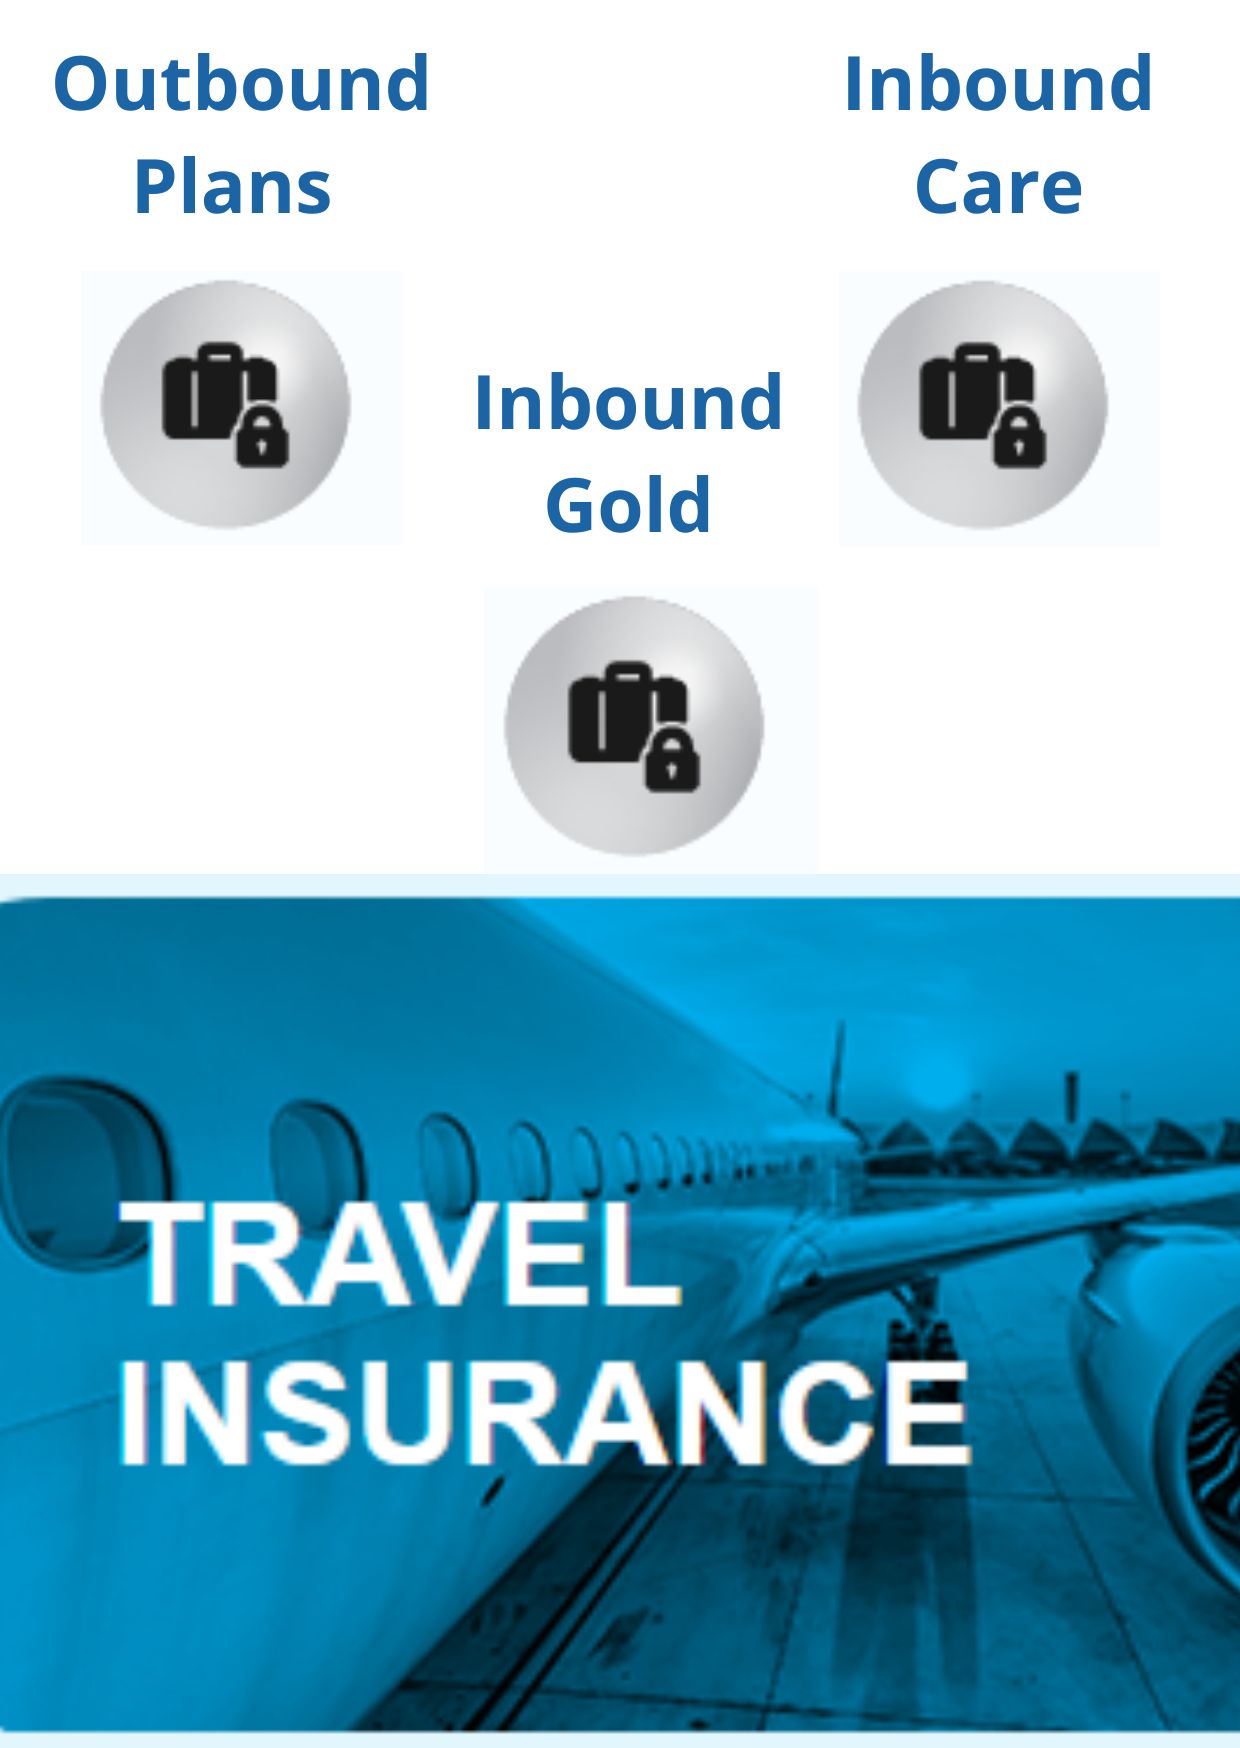 Orient Travel Insurance - Gargash Insurance 